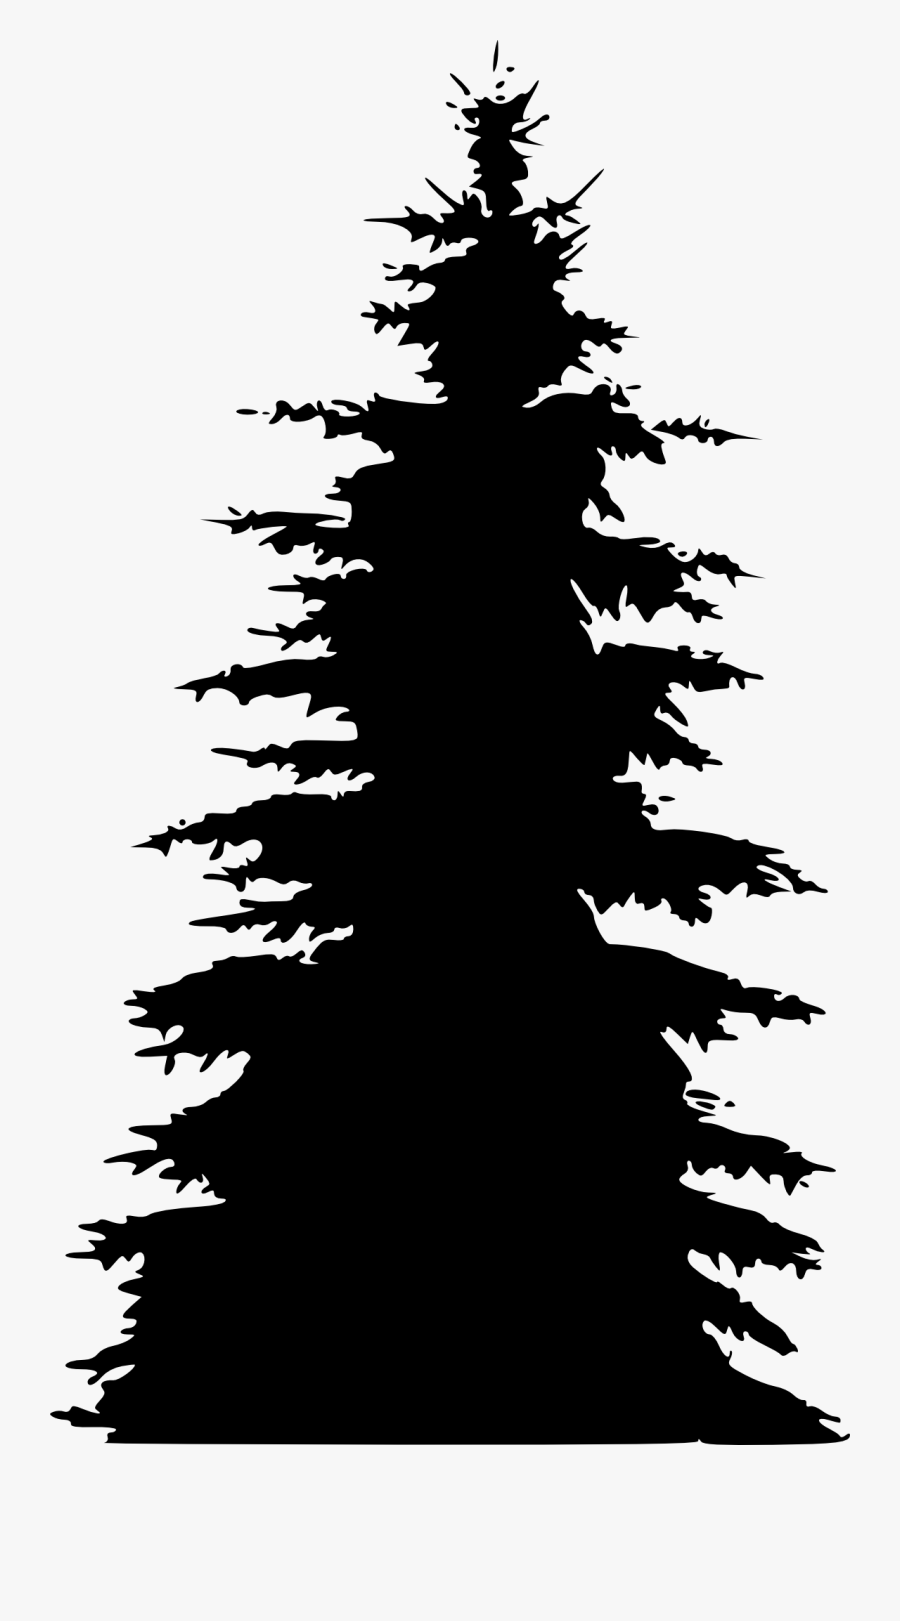 Pine Tree Silhouette - Transparent Tree Silhouette Border, Transparent Clipart